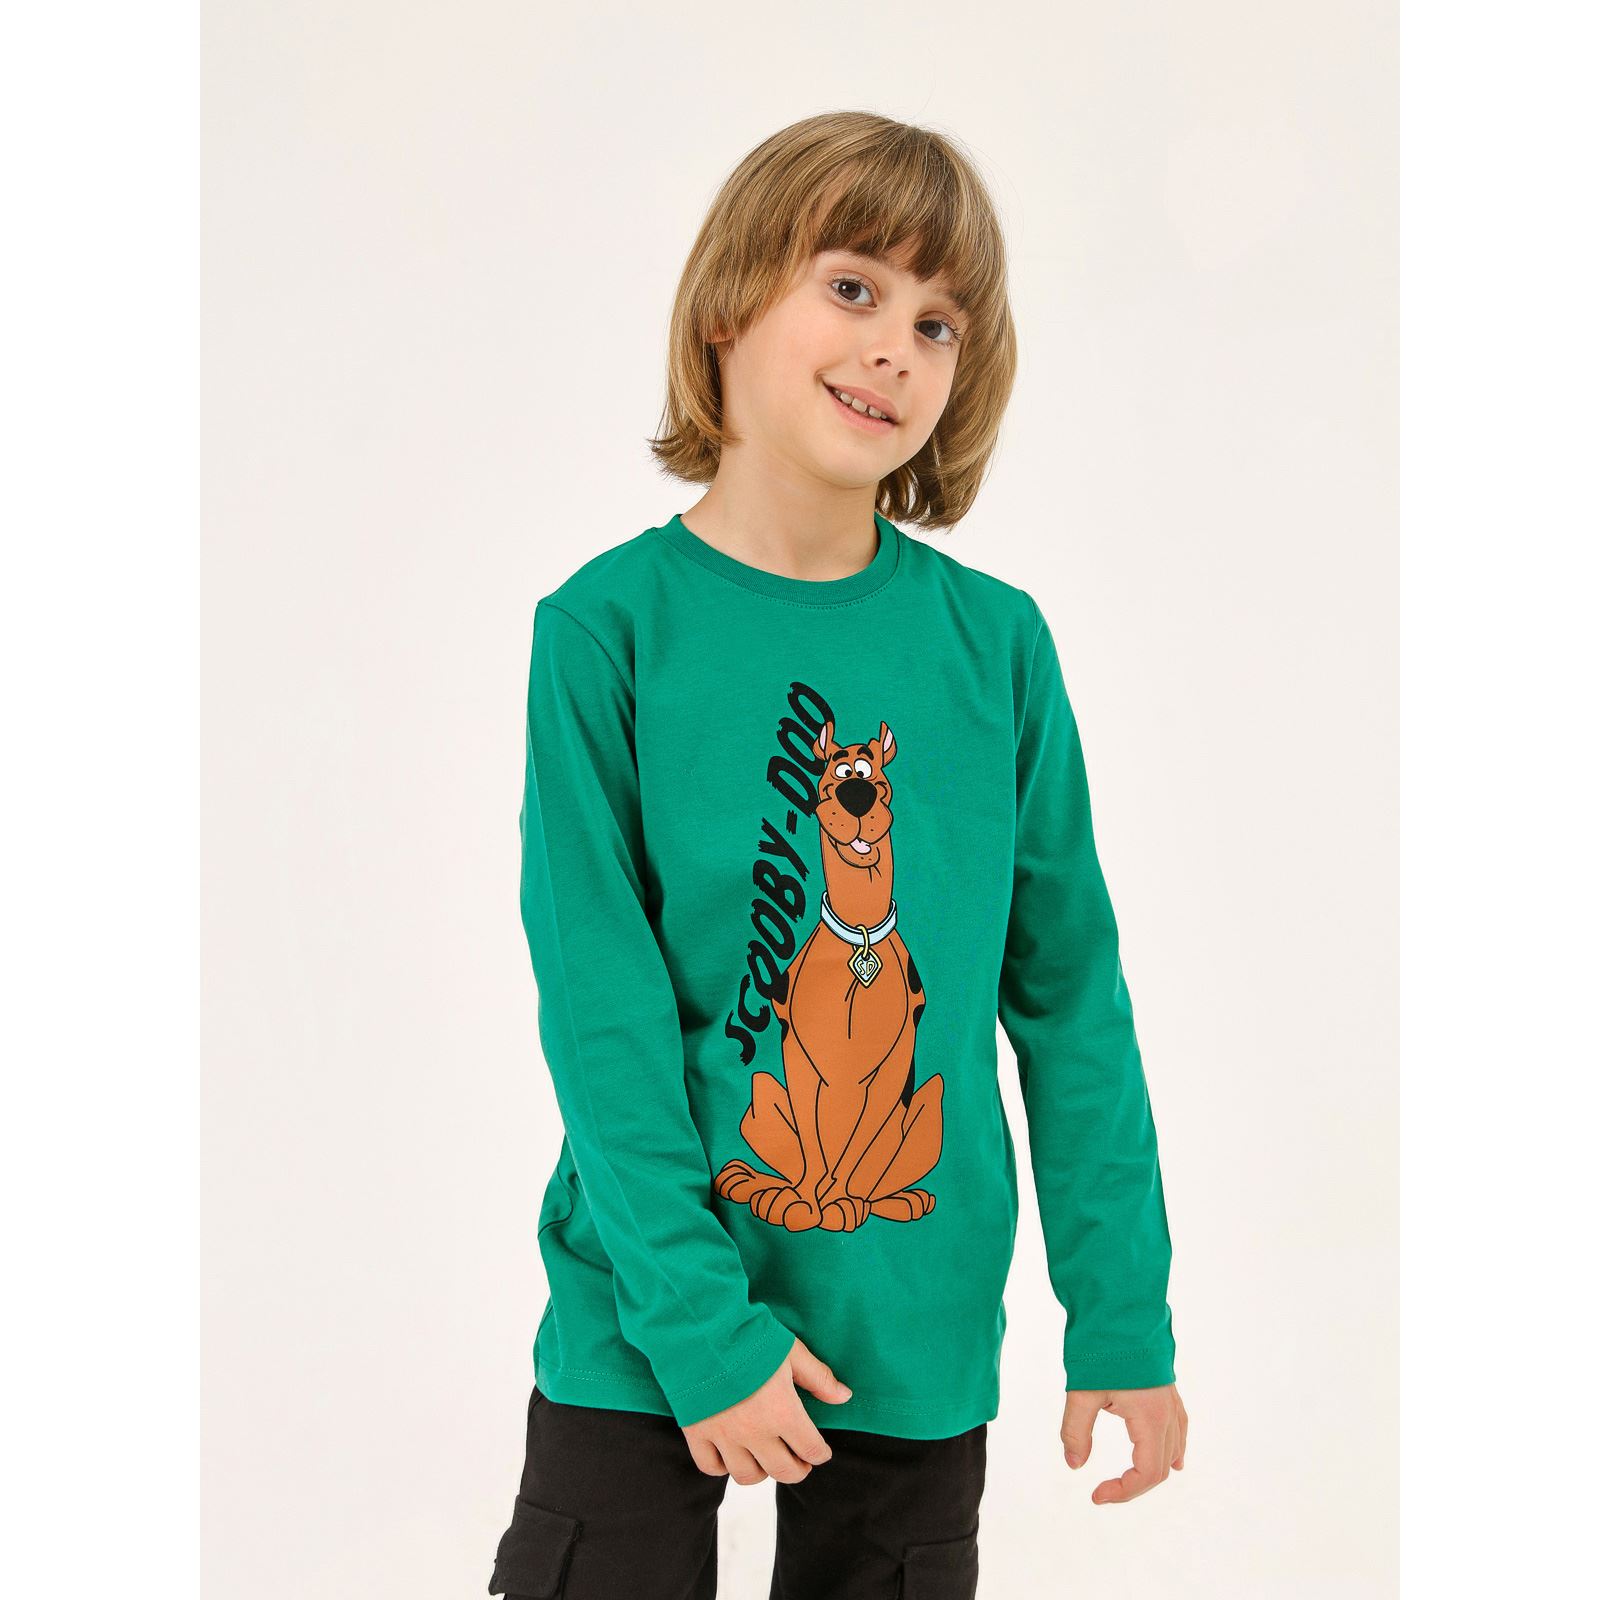 Scooby-Doo Erkek Çocuk Sweatshirt 6-9 Yaş Yeşil